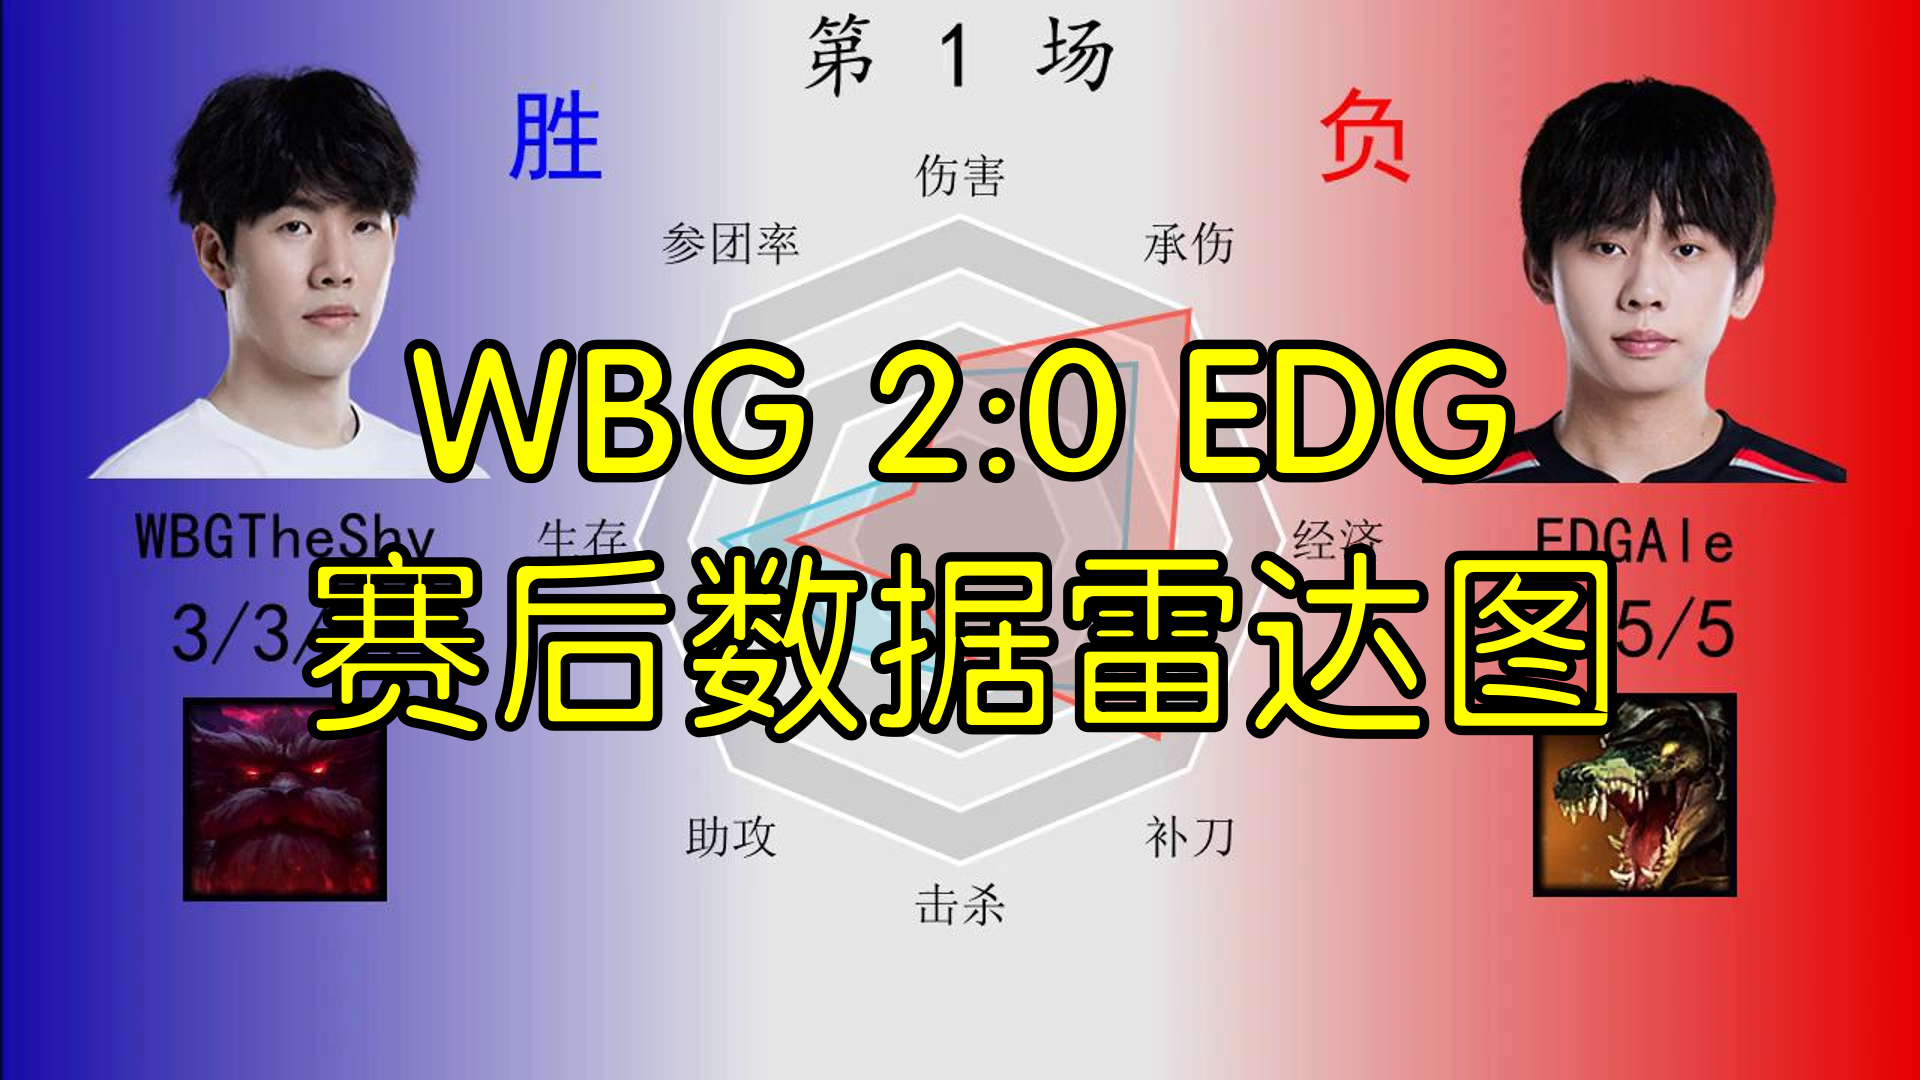 WBG 2:0 EDG赛后数据雷达图